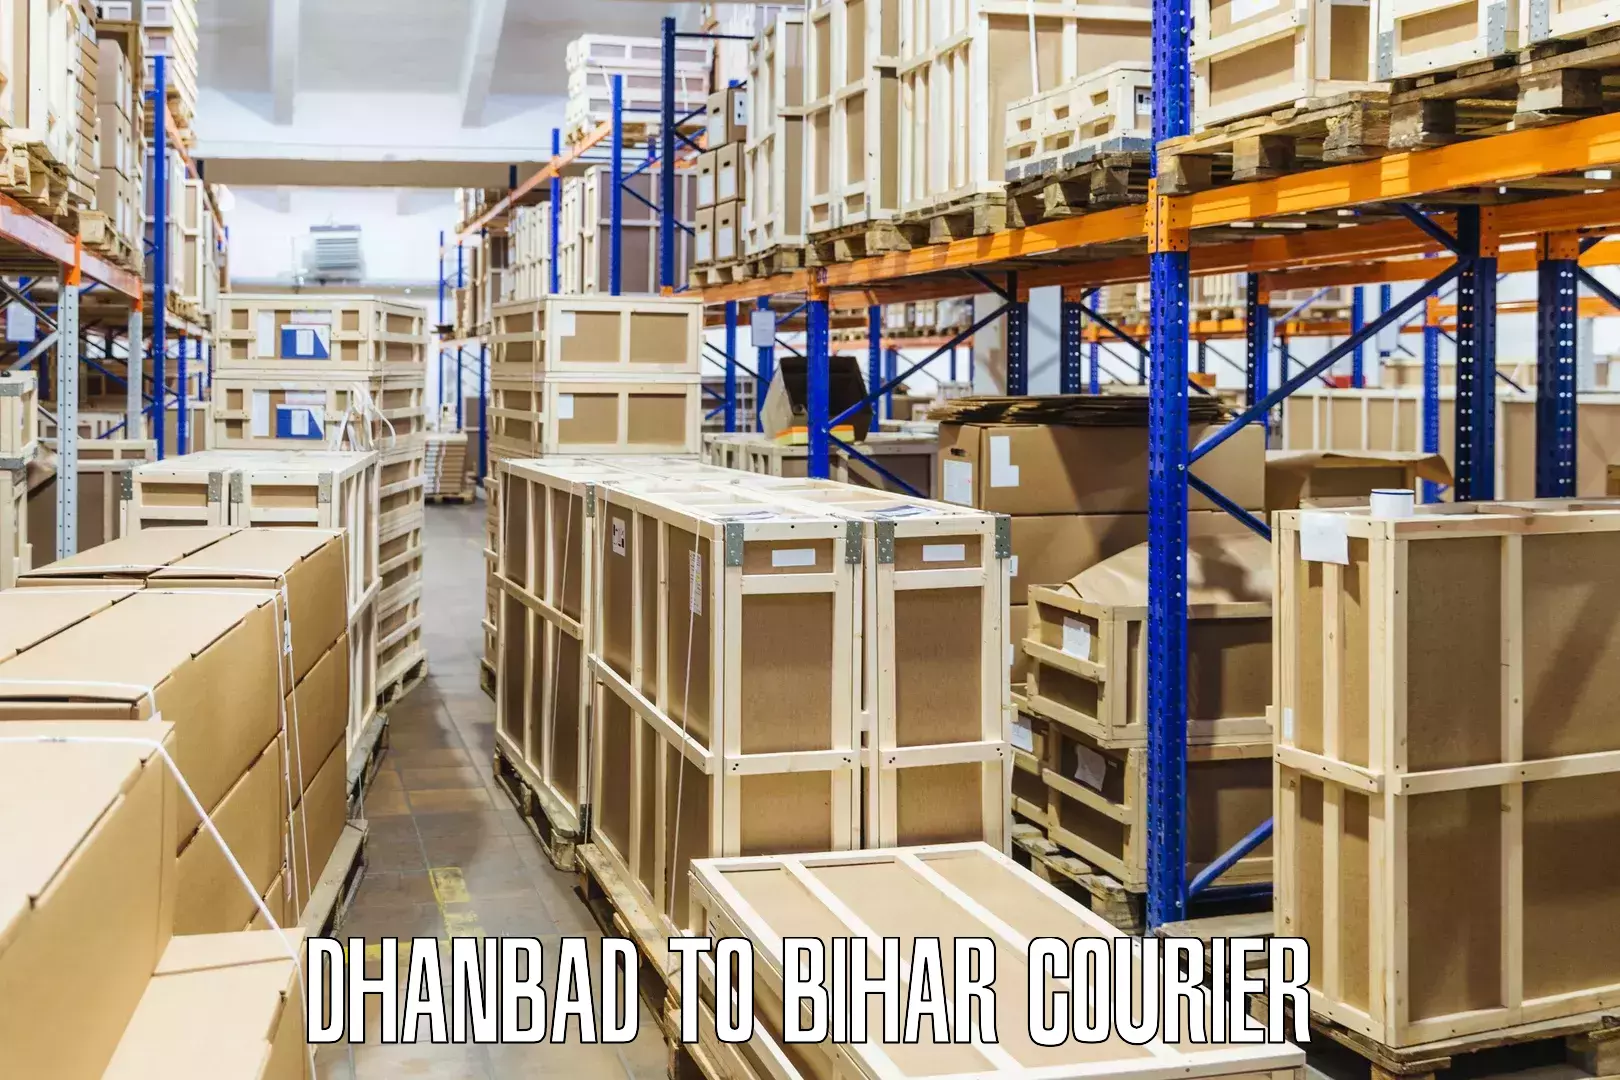 Global logistics network Dhanbad to Bihar